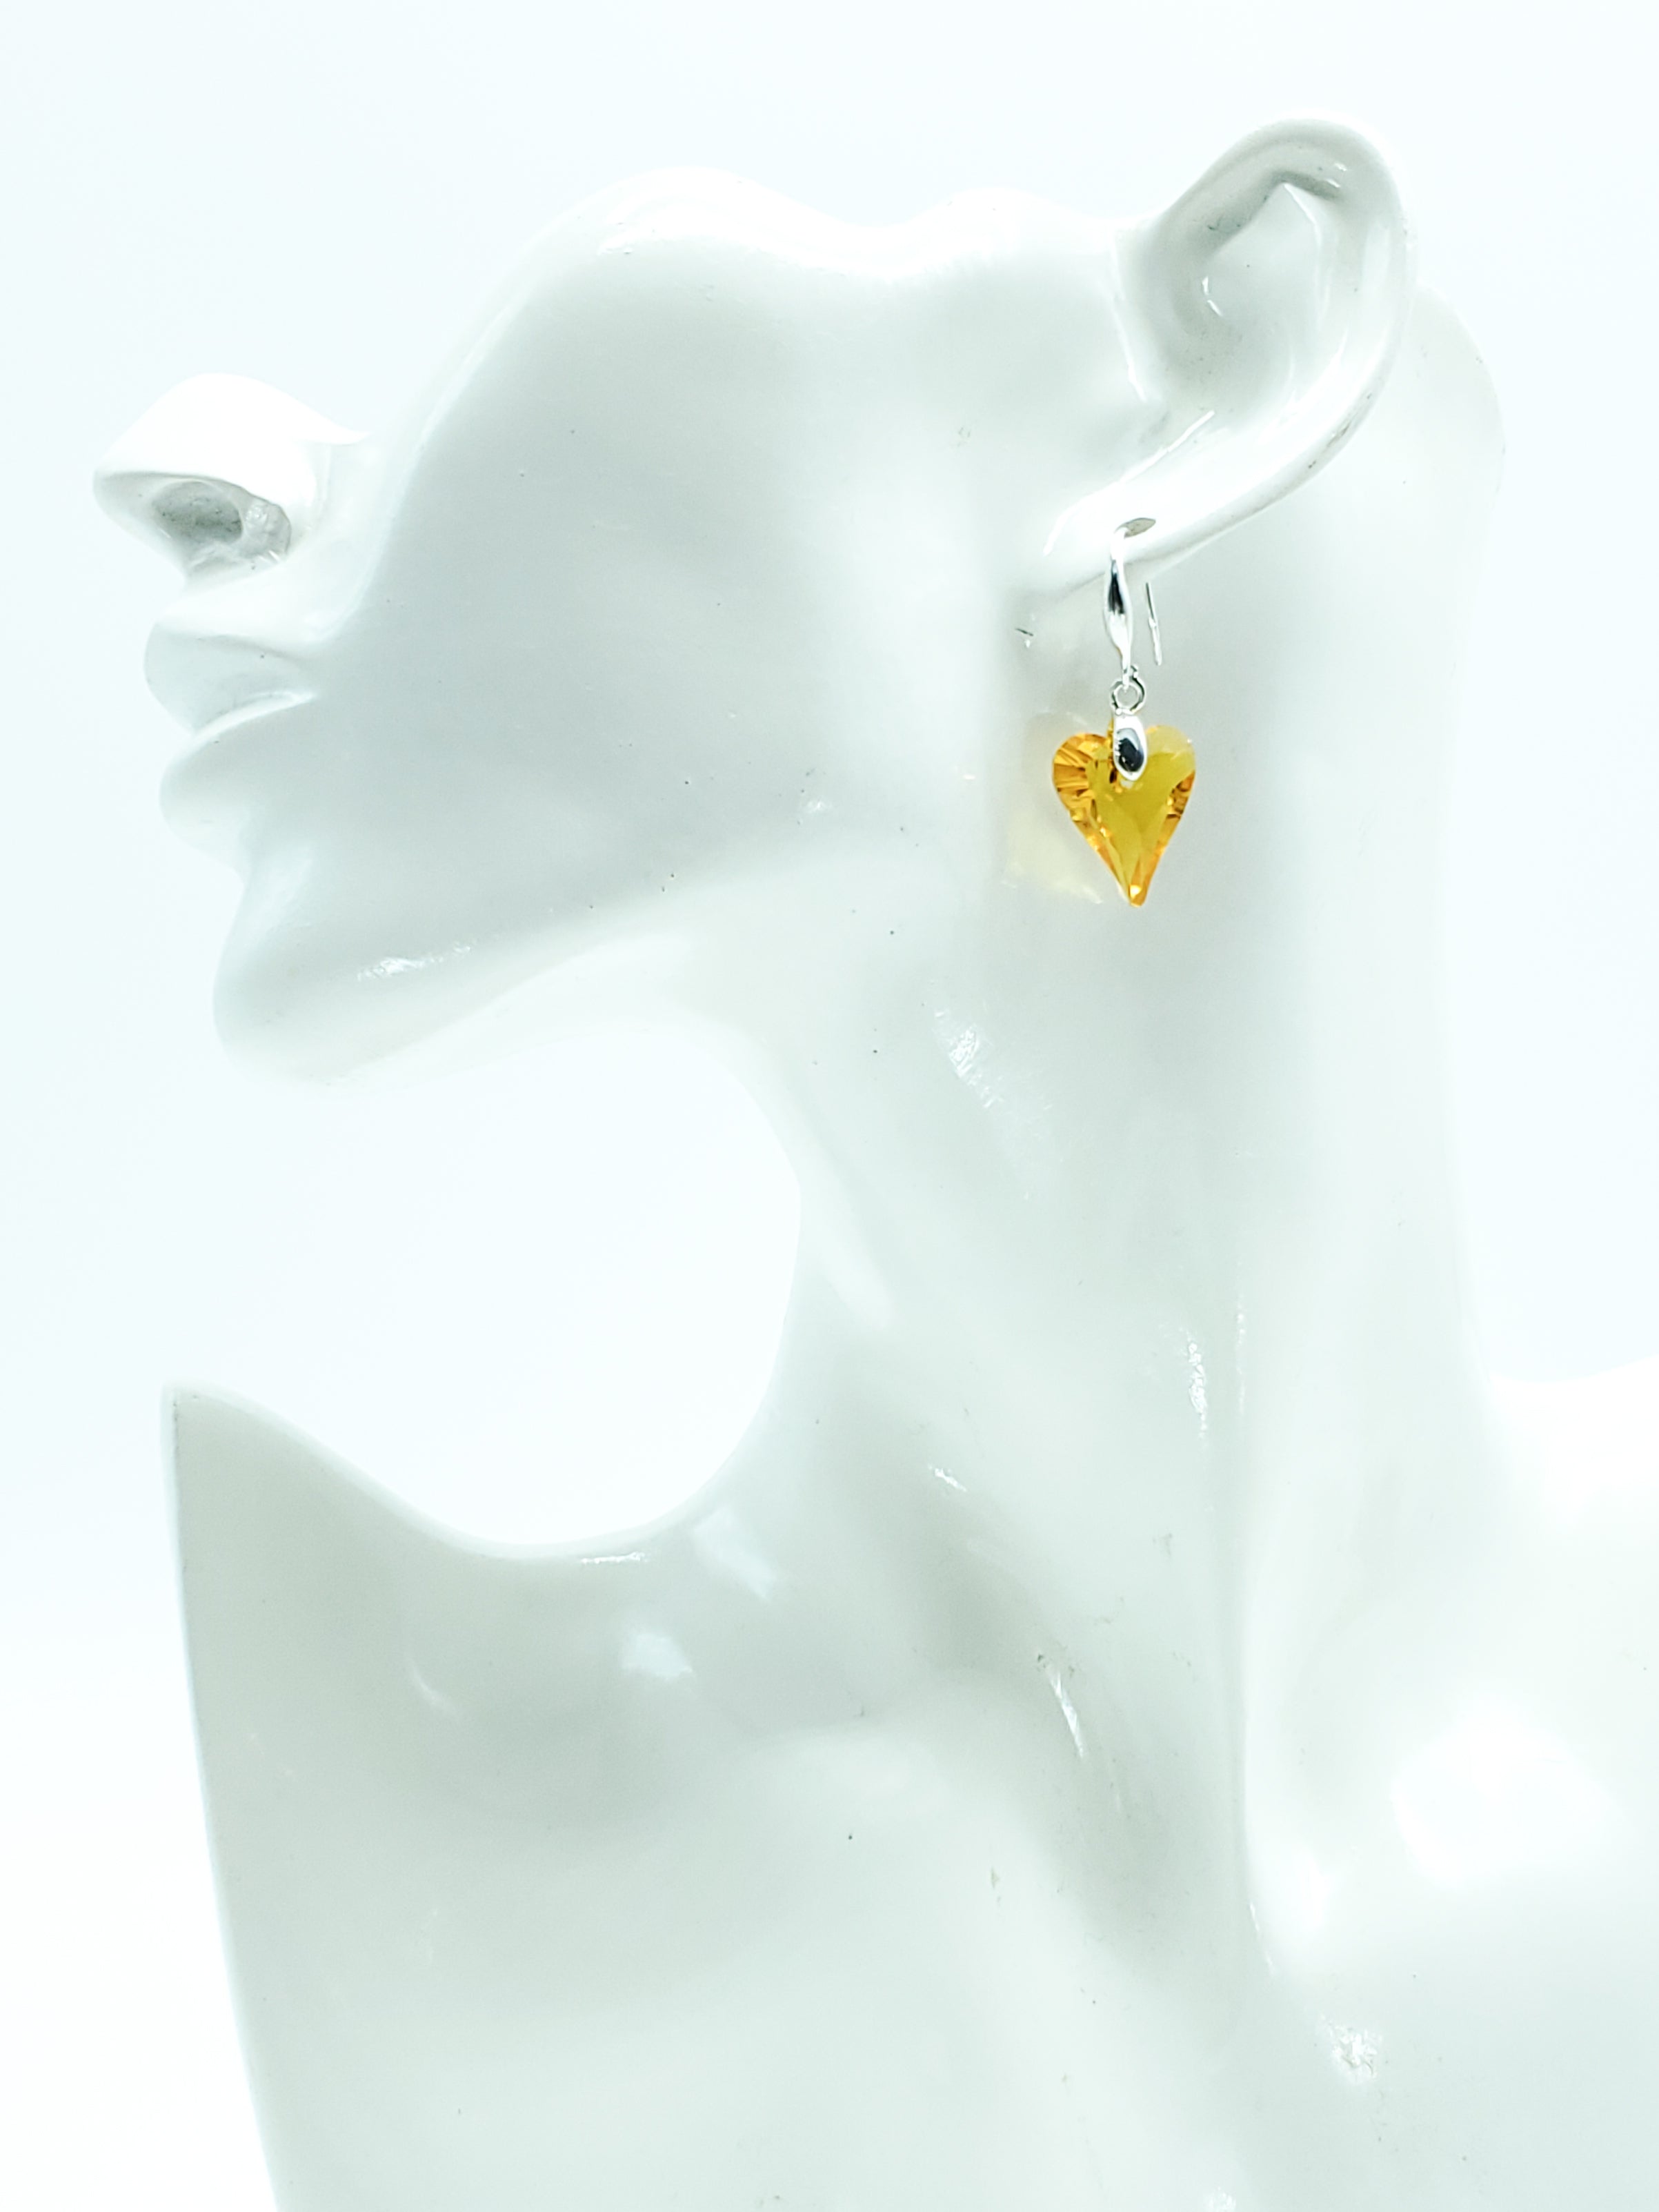 "Sunflower" Wild Heart Swarovski Earrings on Sterling Silver - The Caffeinated Raven